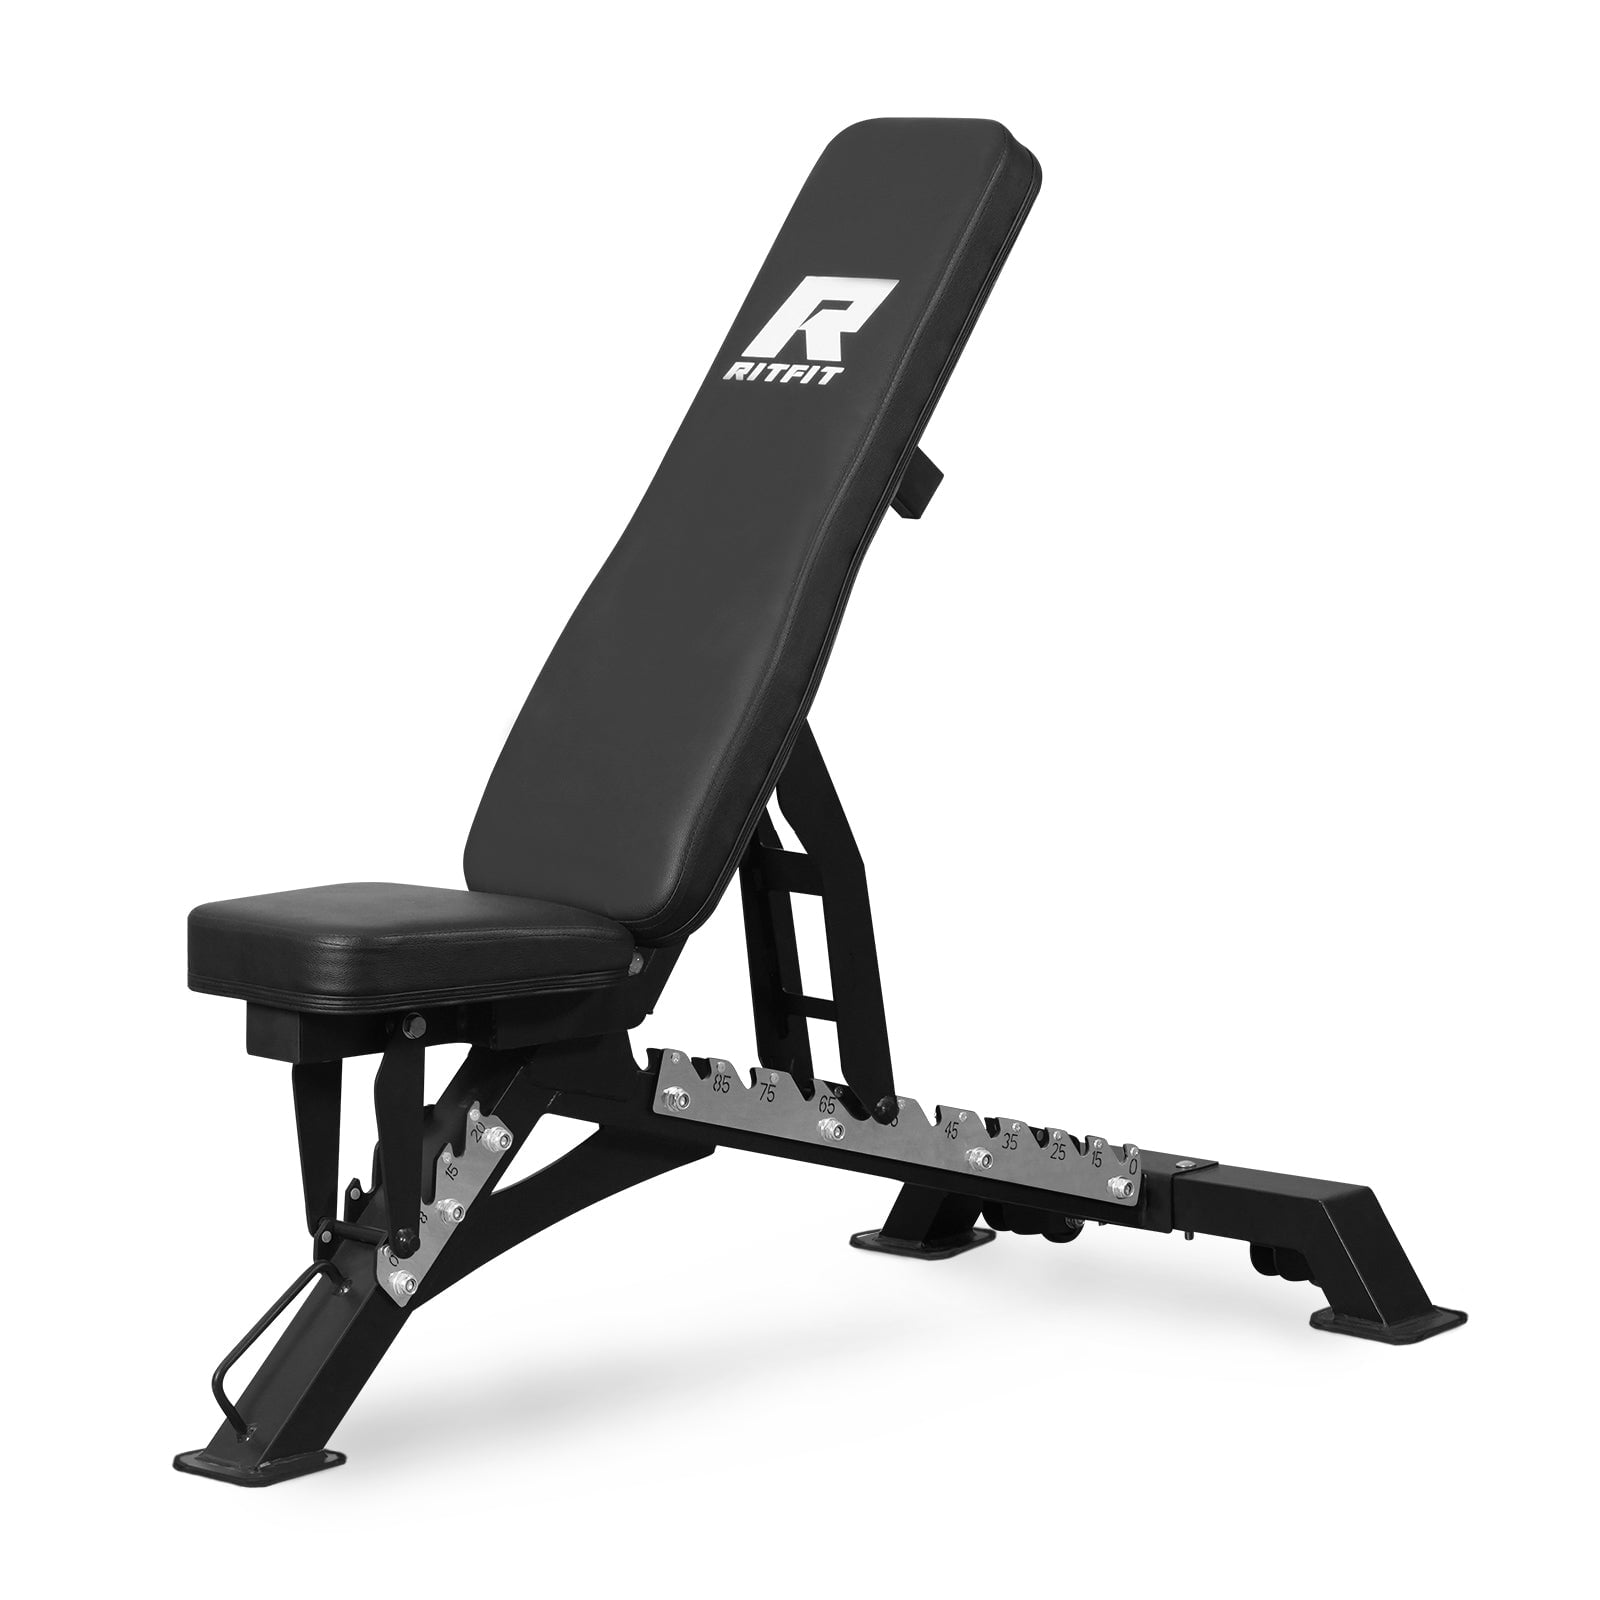 RitFit 1300LB Adjustable Weight Bench BWB01 Exercise & Fitness RitFit Black 